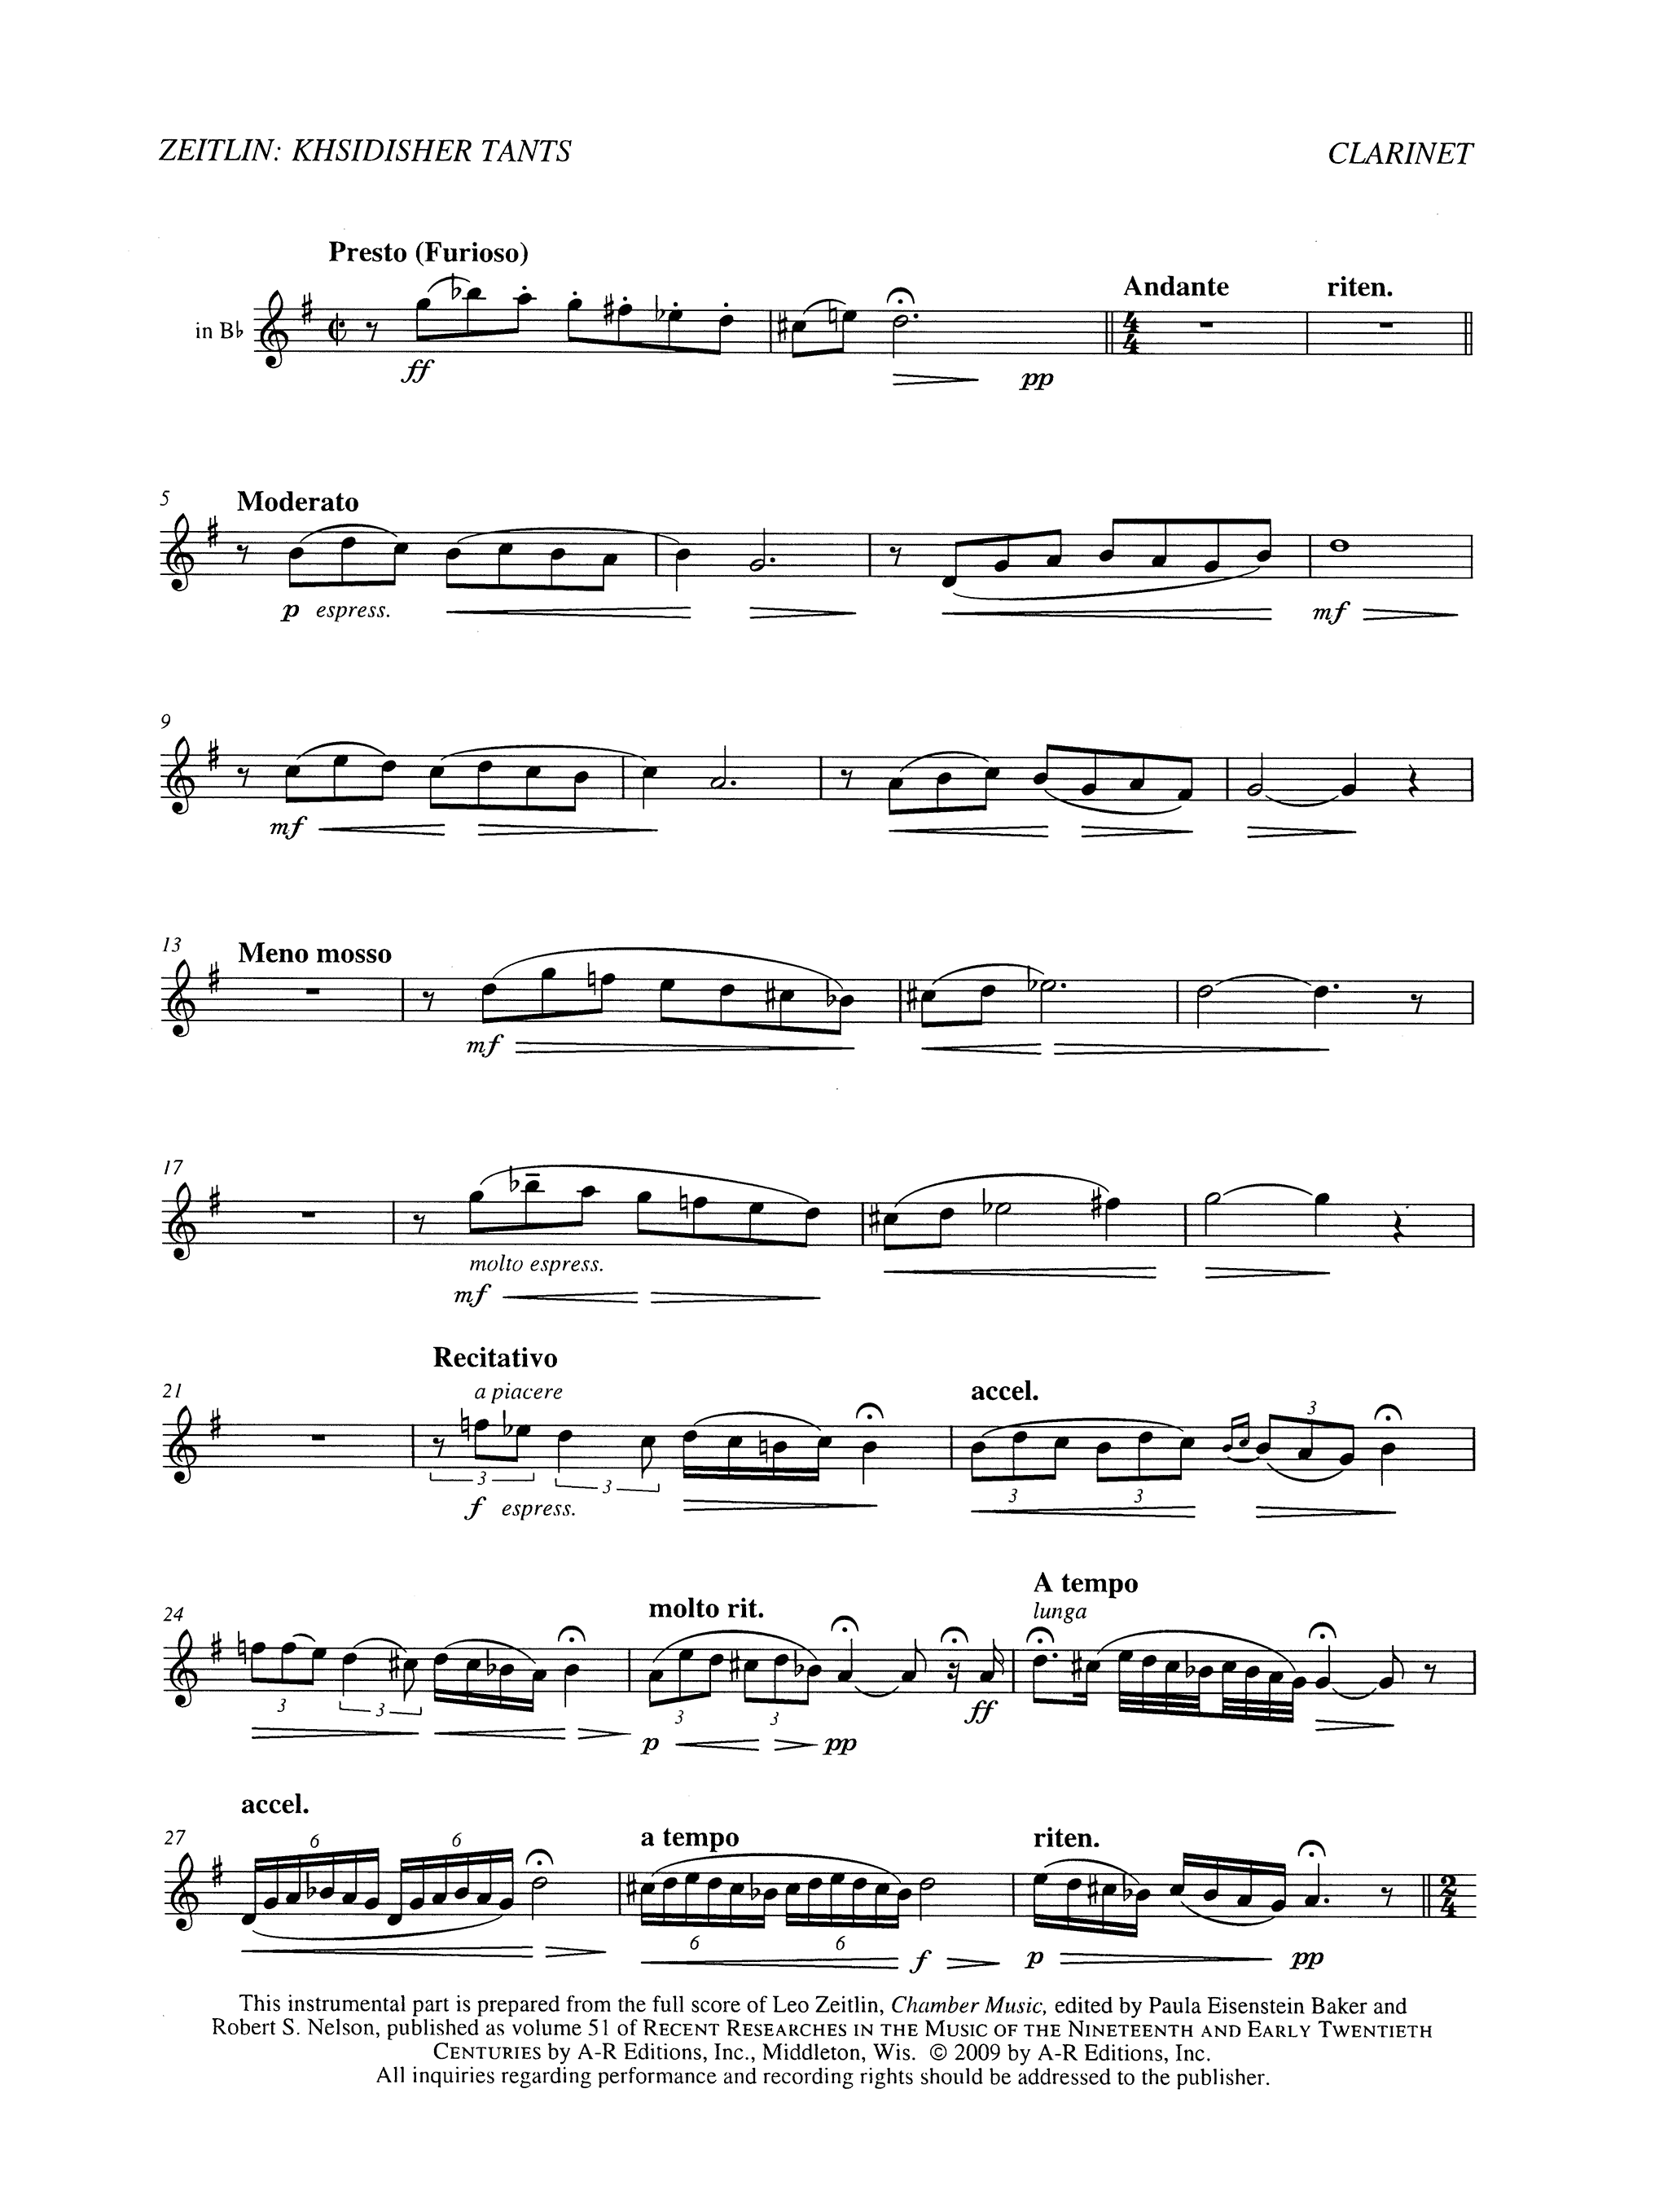 Zeitlin Khsidisher tants clarinet part